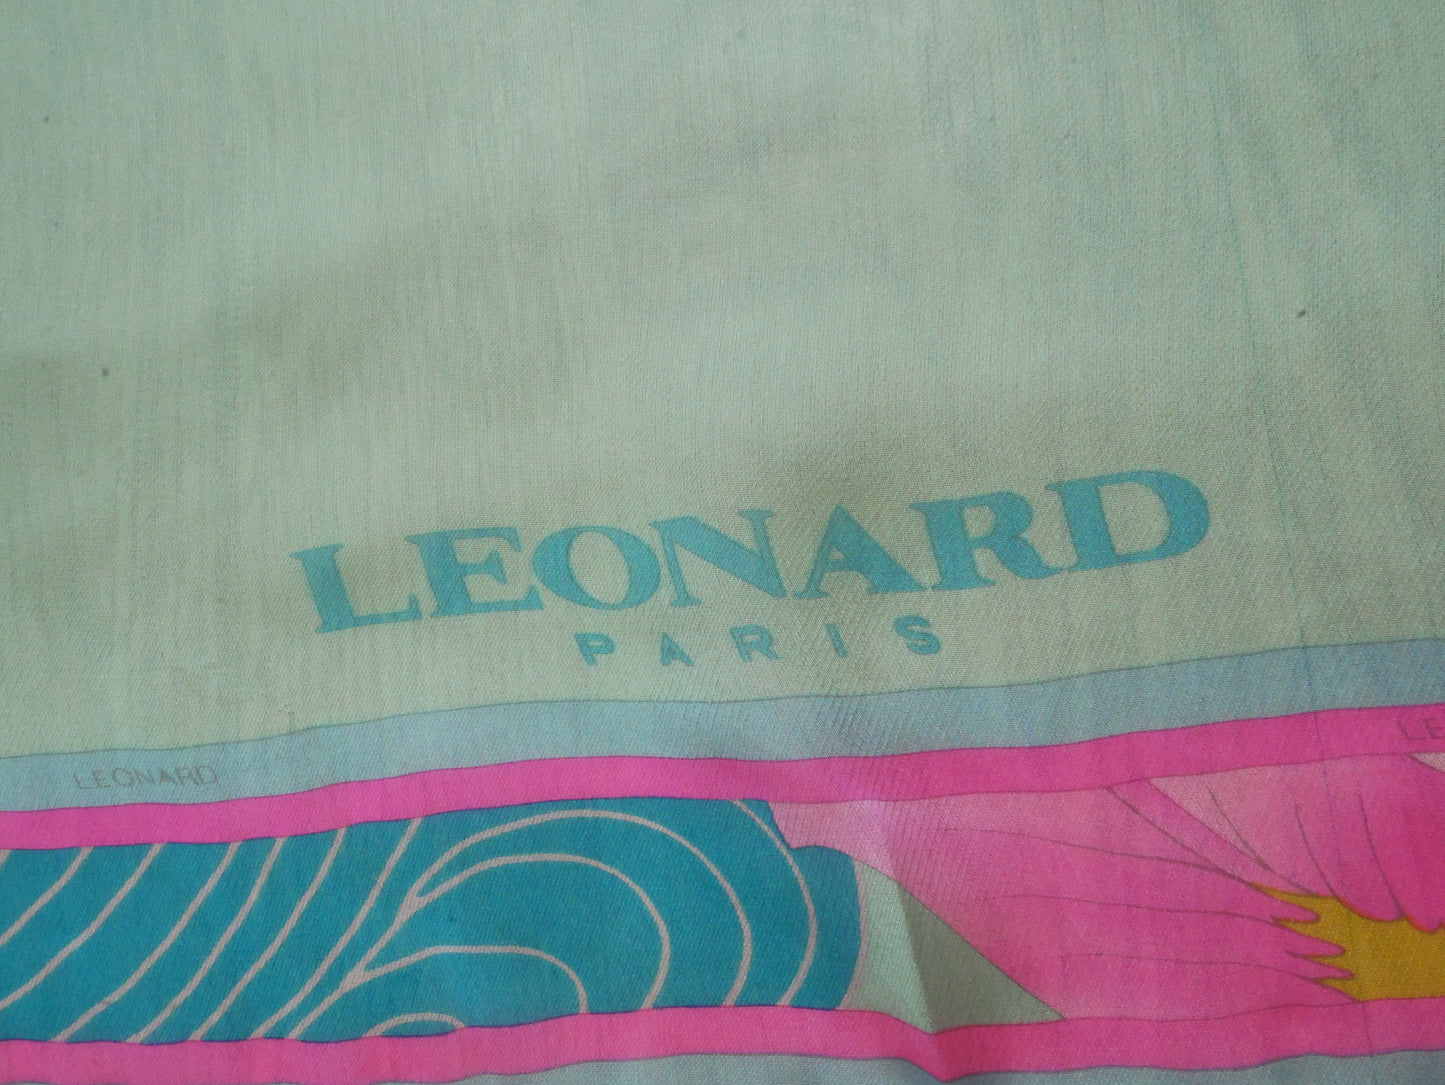 LEONARD Scarves vintage Lysis Paris pre-owned secondhand